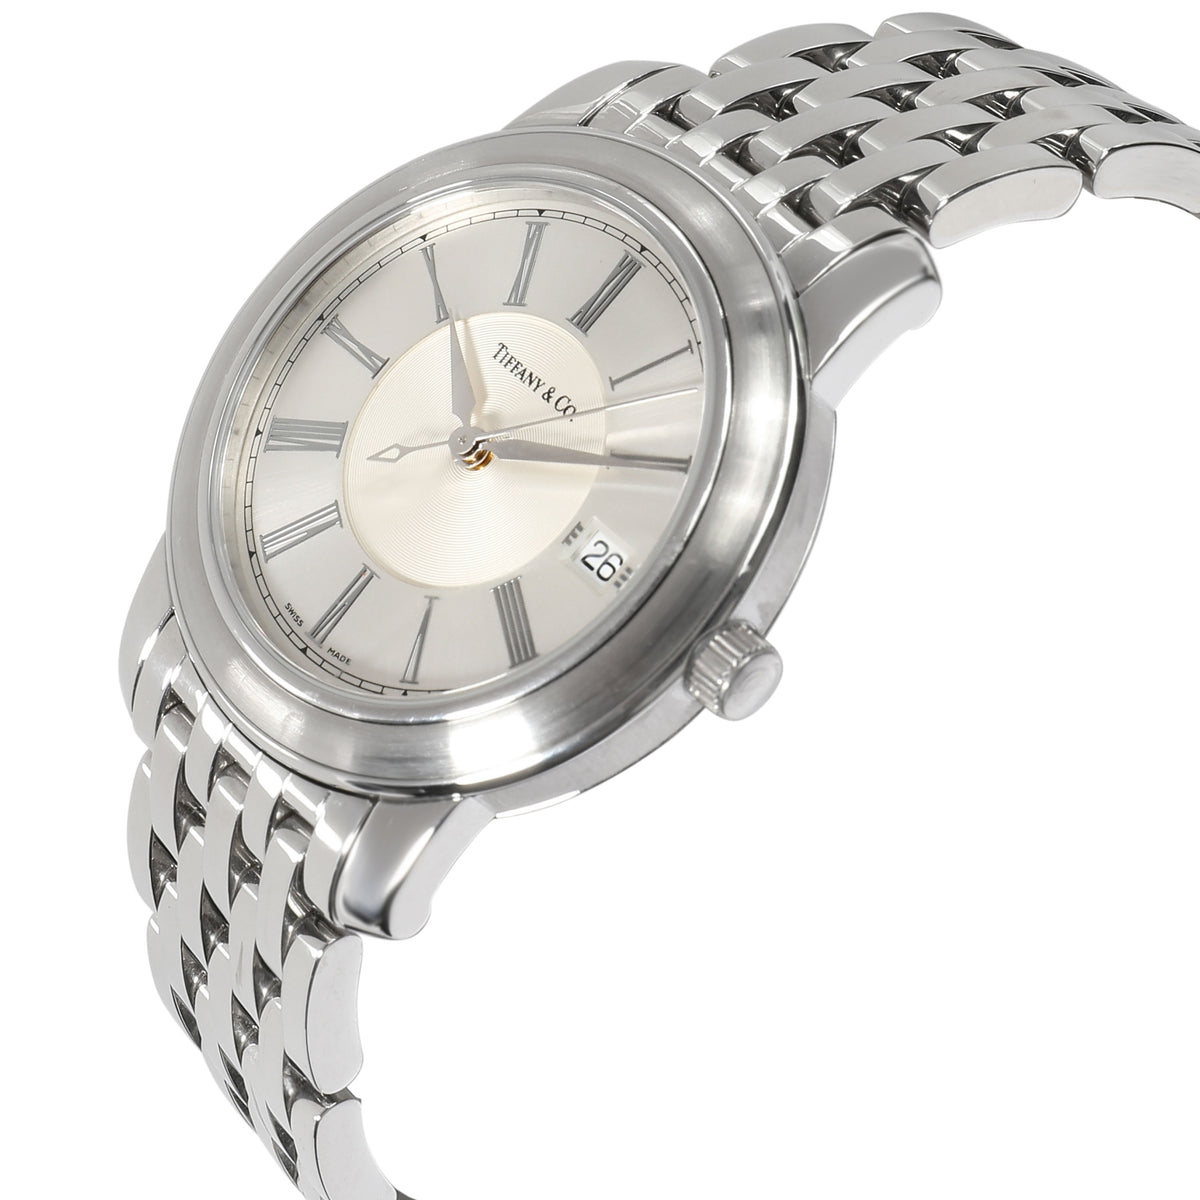 Tiffany & Co. Mark Resonator Mark Resonator Men's Watch in  Stainless Steel